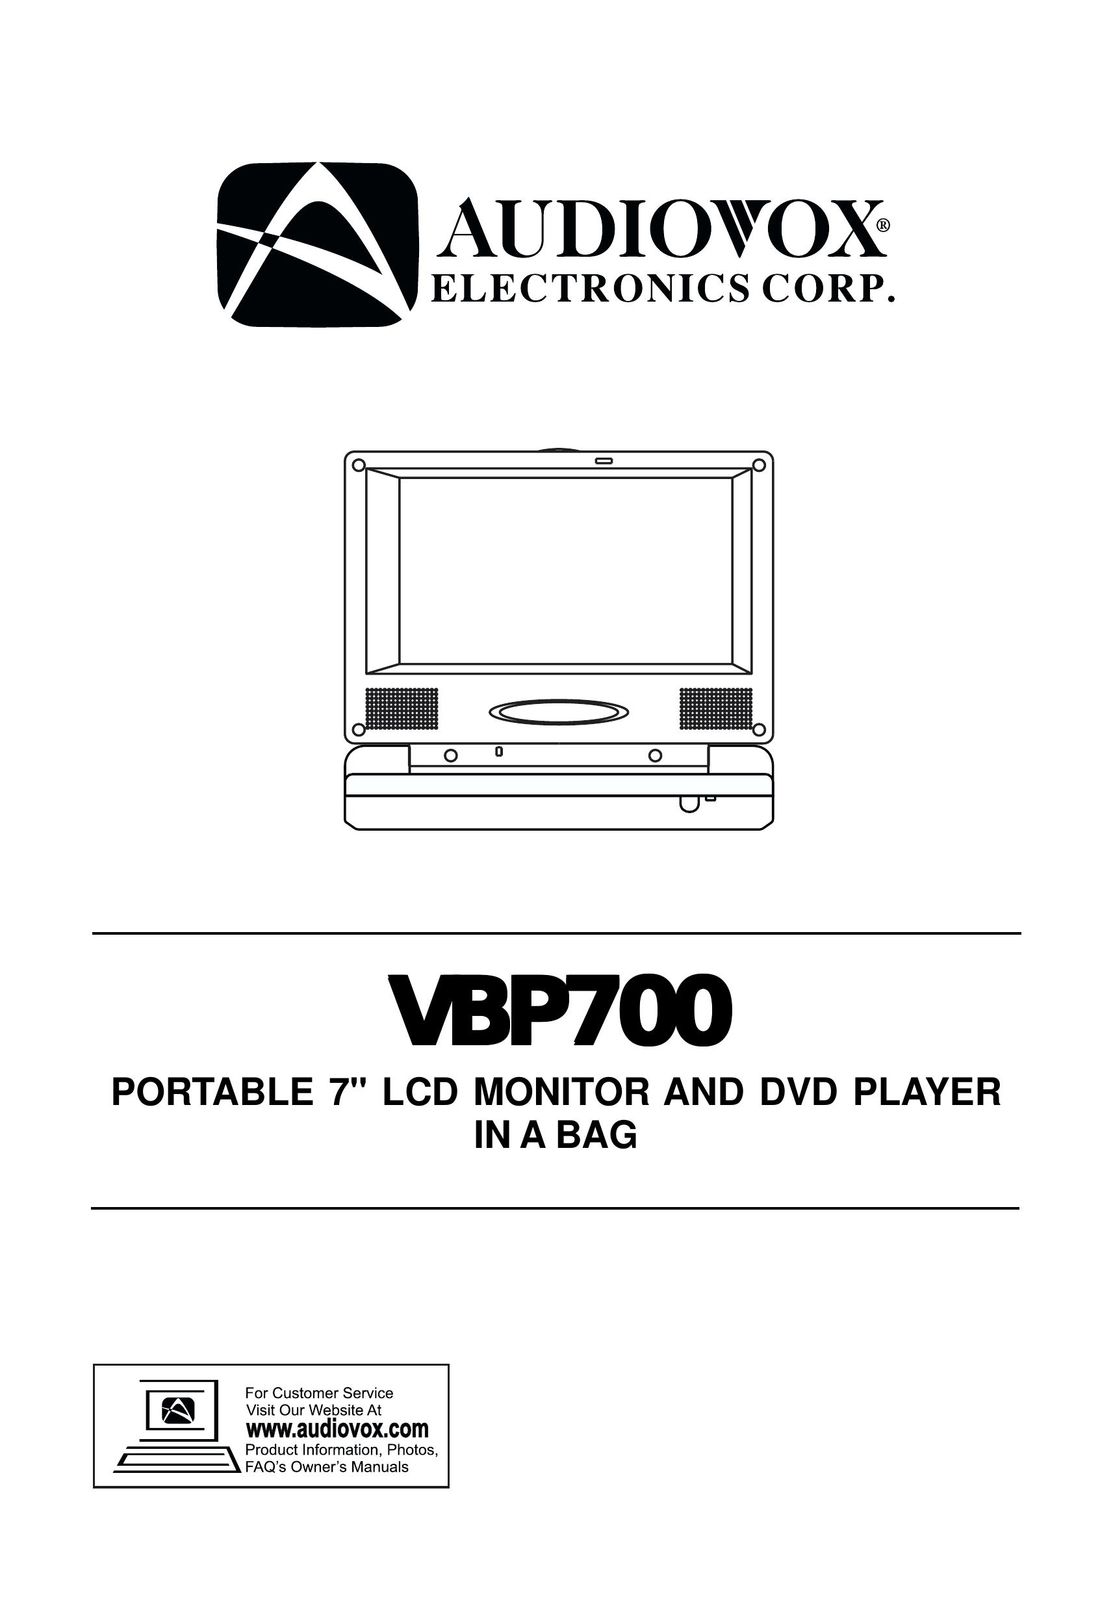 Audiovox VBP700 DVD Player User Manual